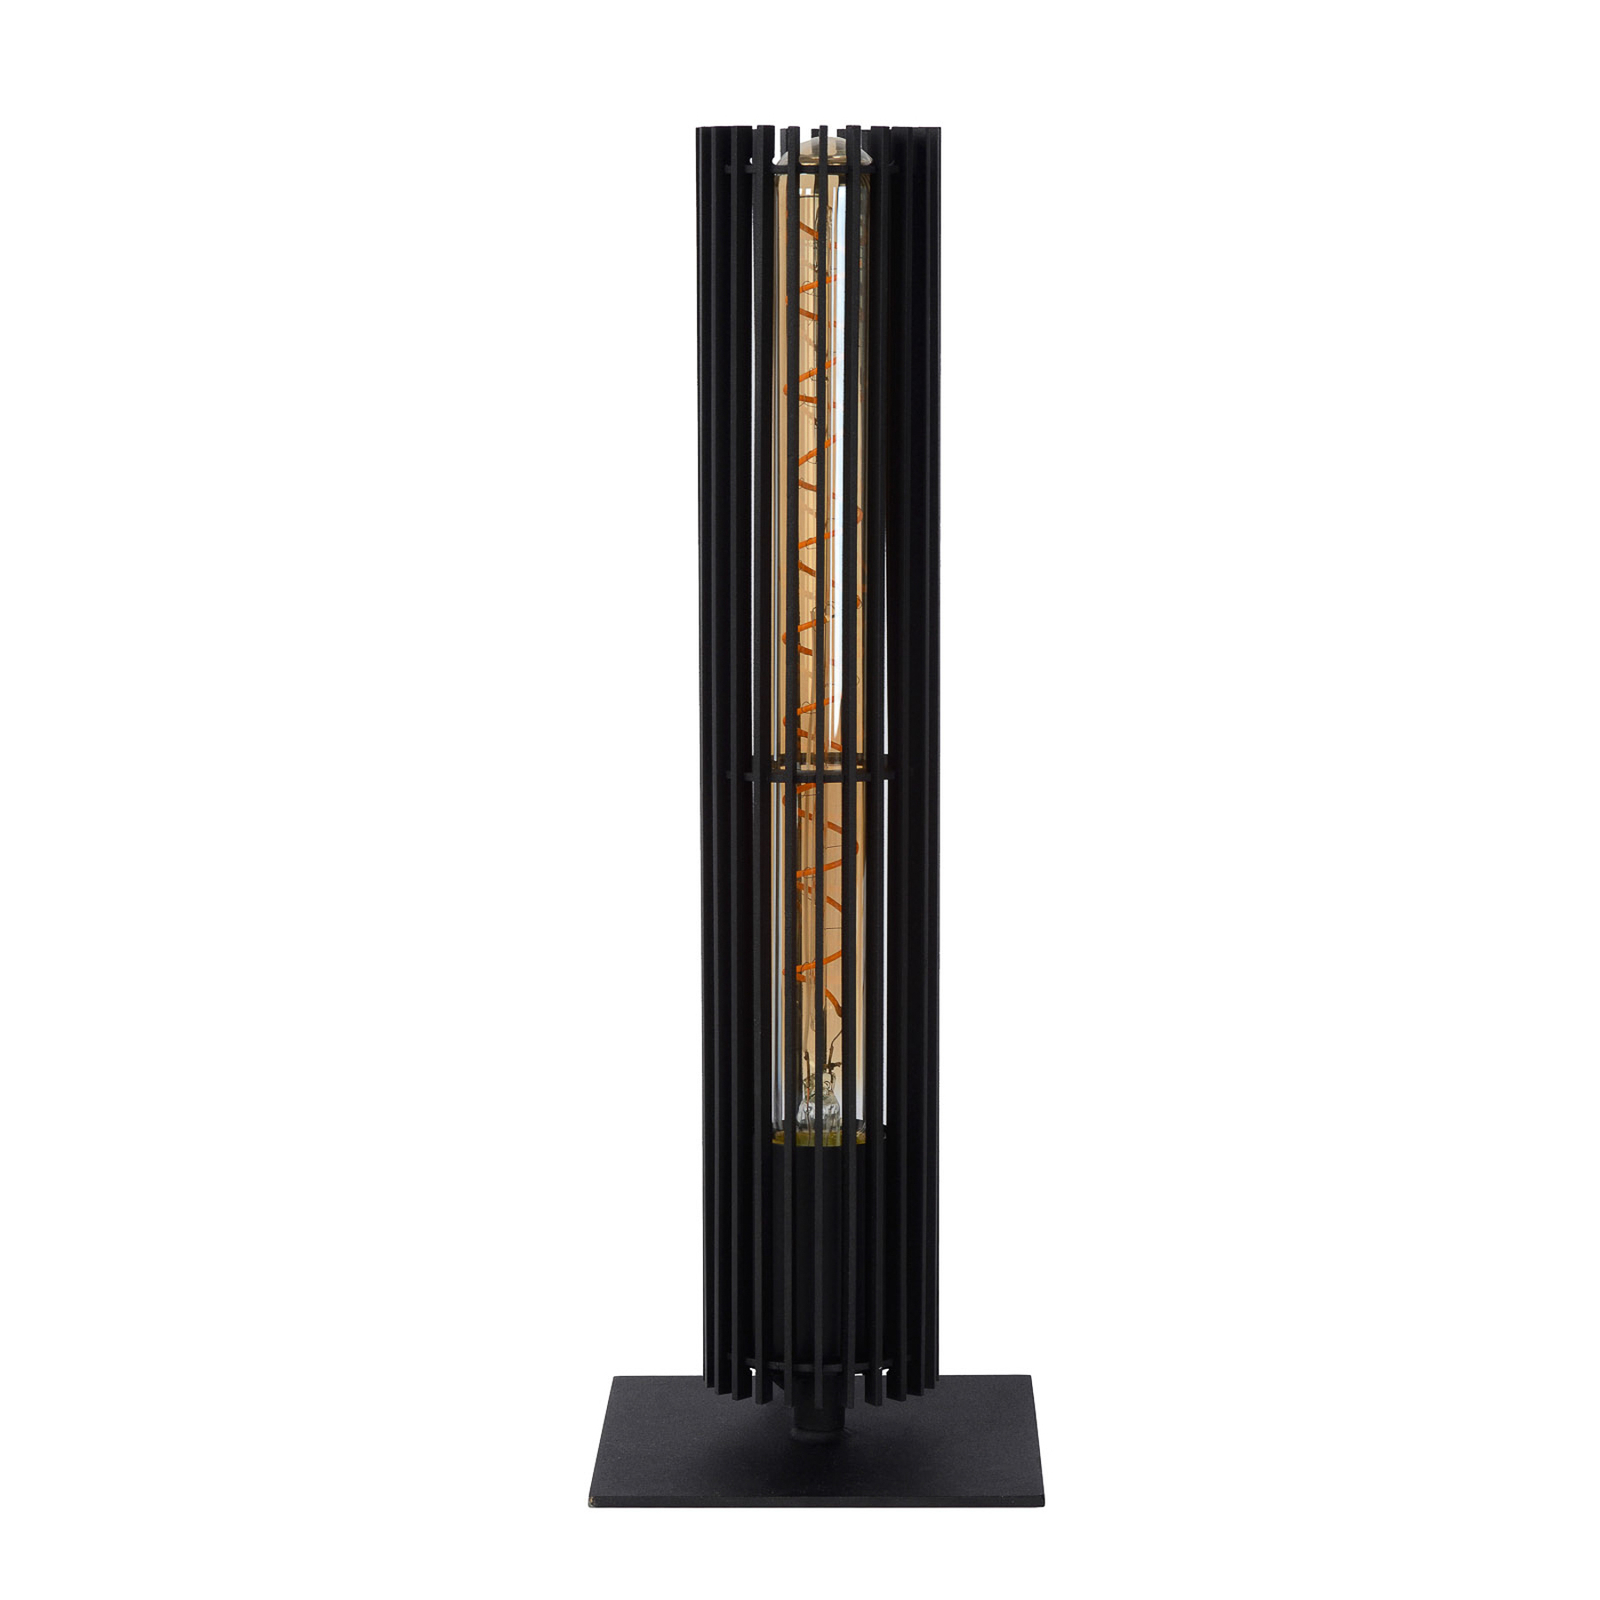 Lionel bordslampa i svart metall